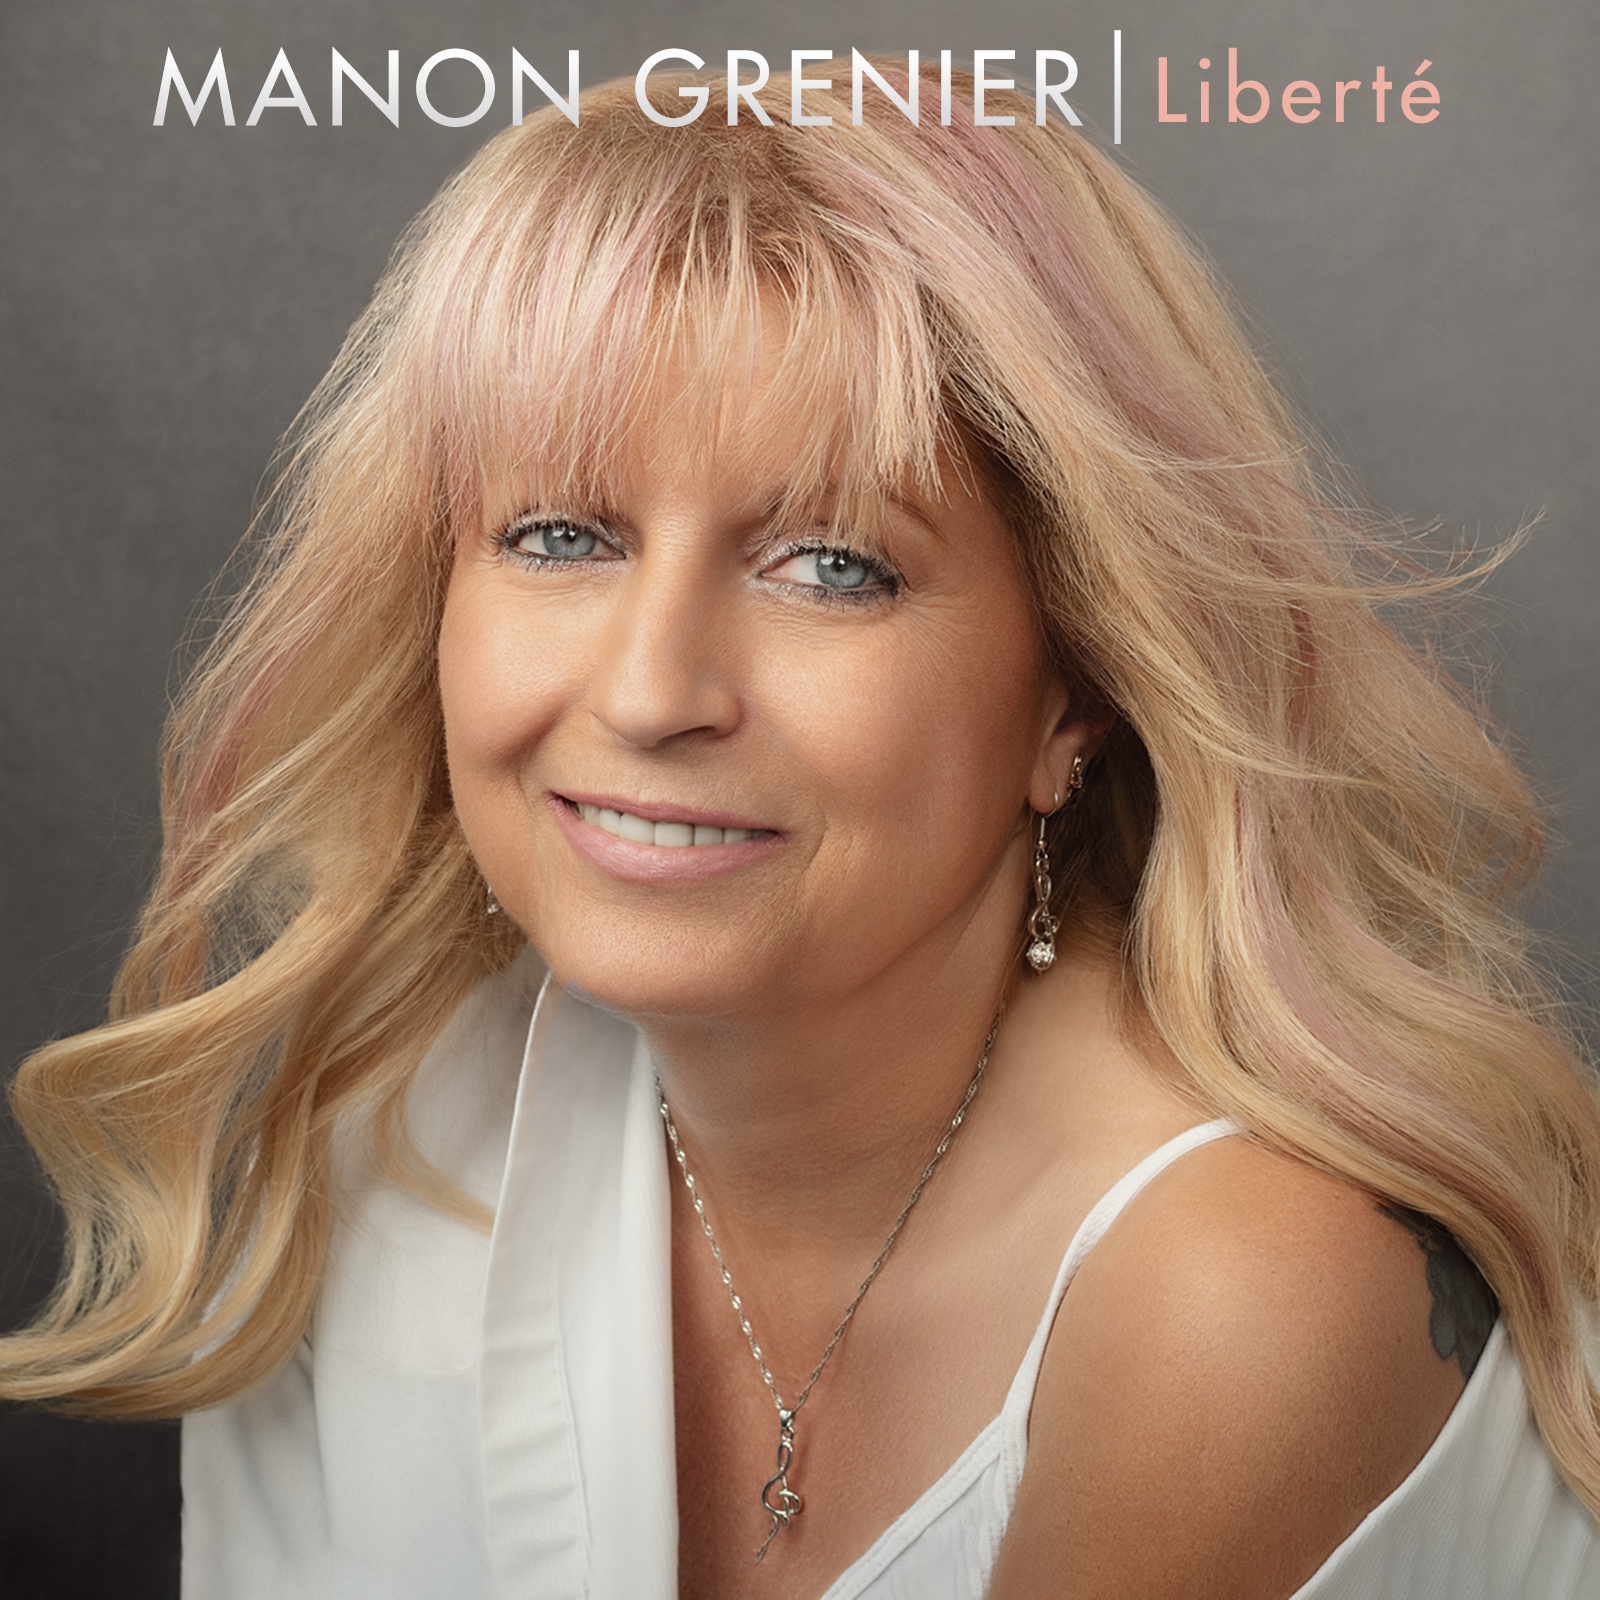 Manon Grenier lance son 10e album en carrière